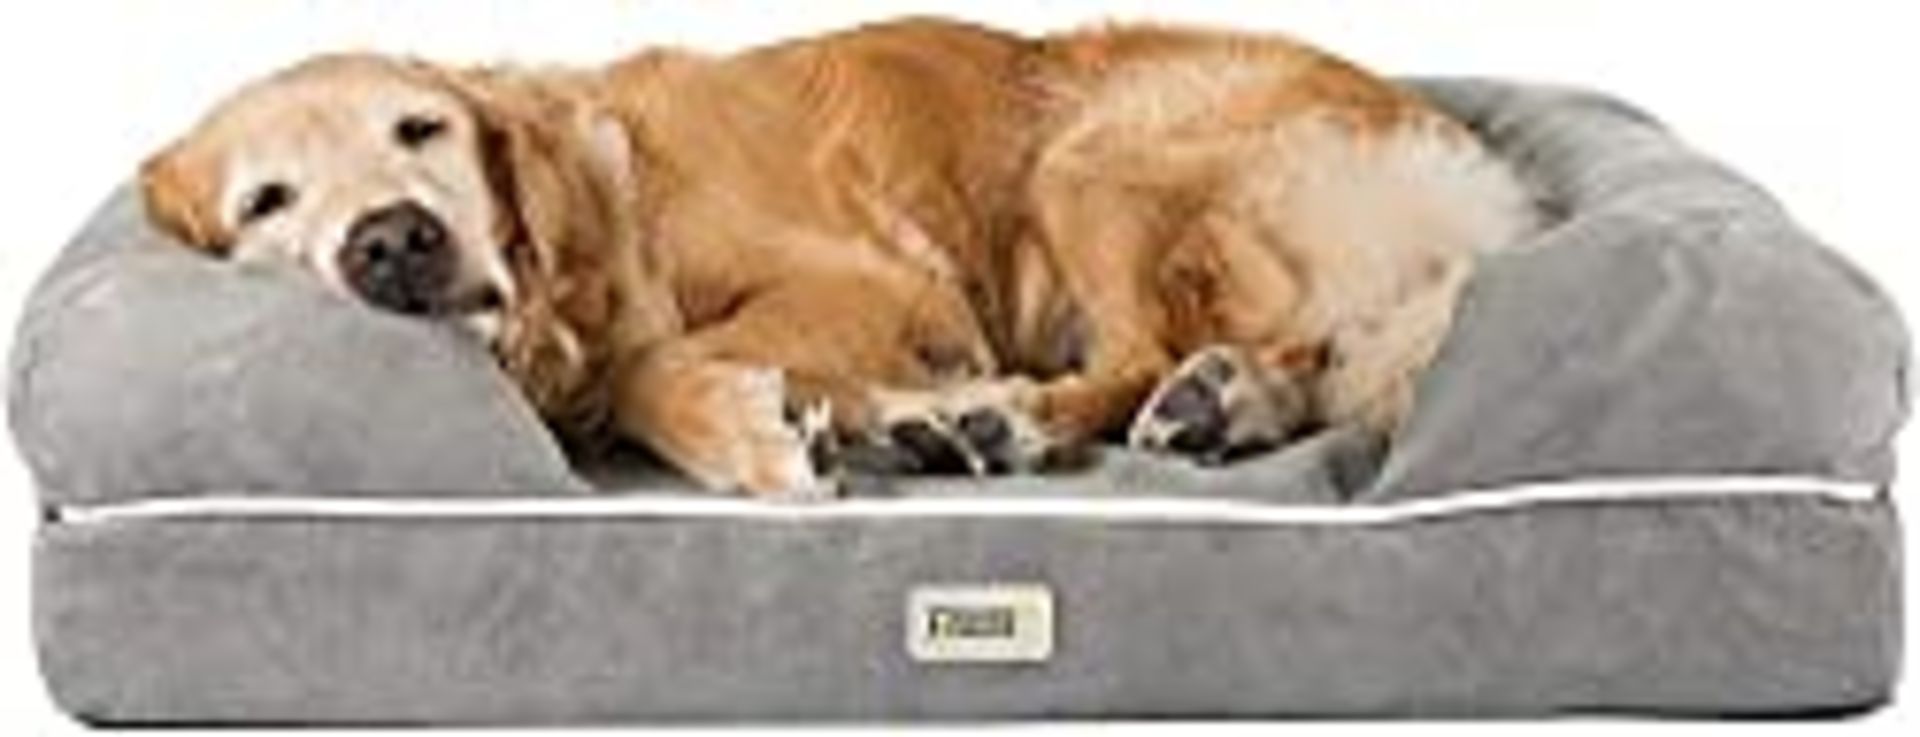 RRP £118.56 SCM Orthopedic Dog Bed Lounge Sofa